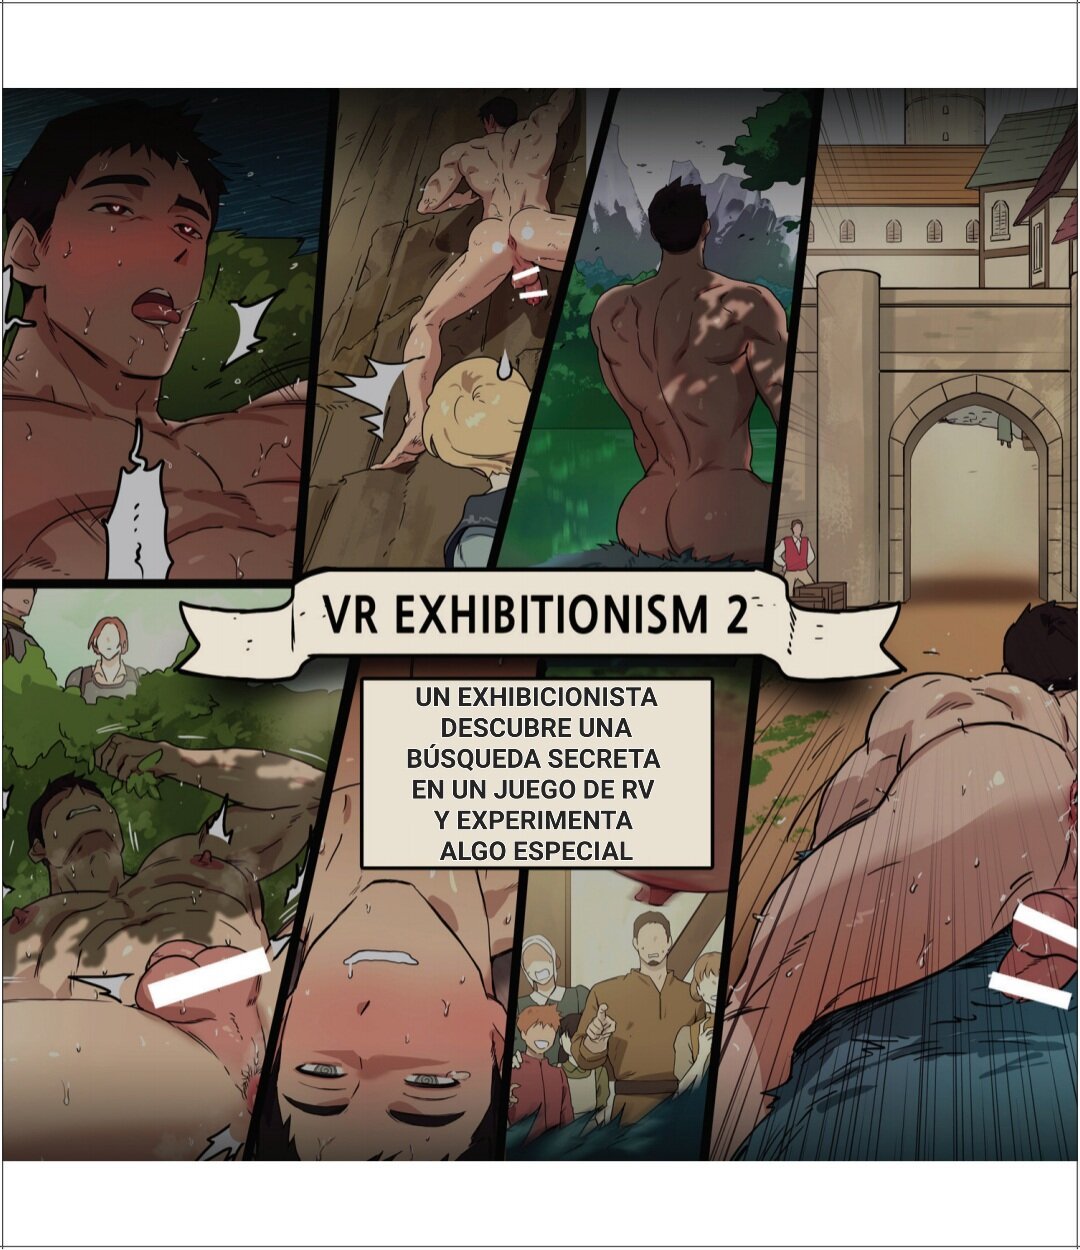 VR EXHIBITIONISM 2 - 0